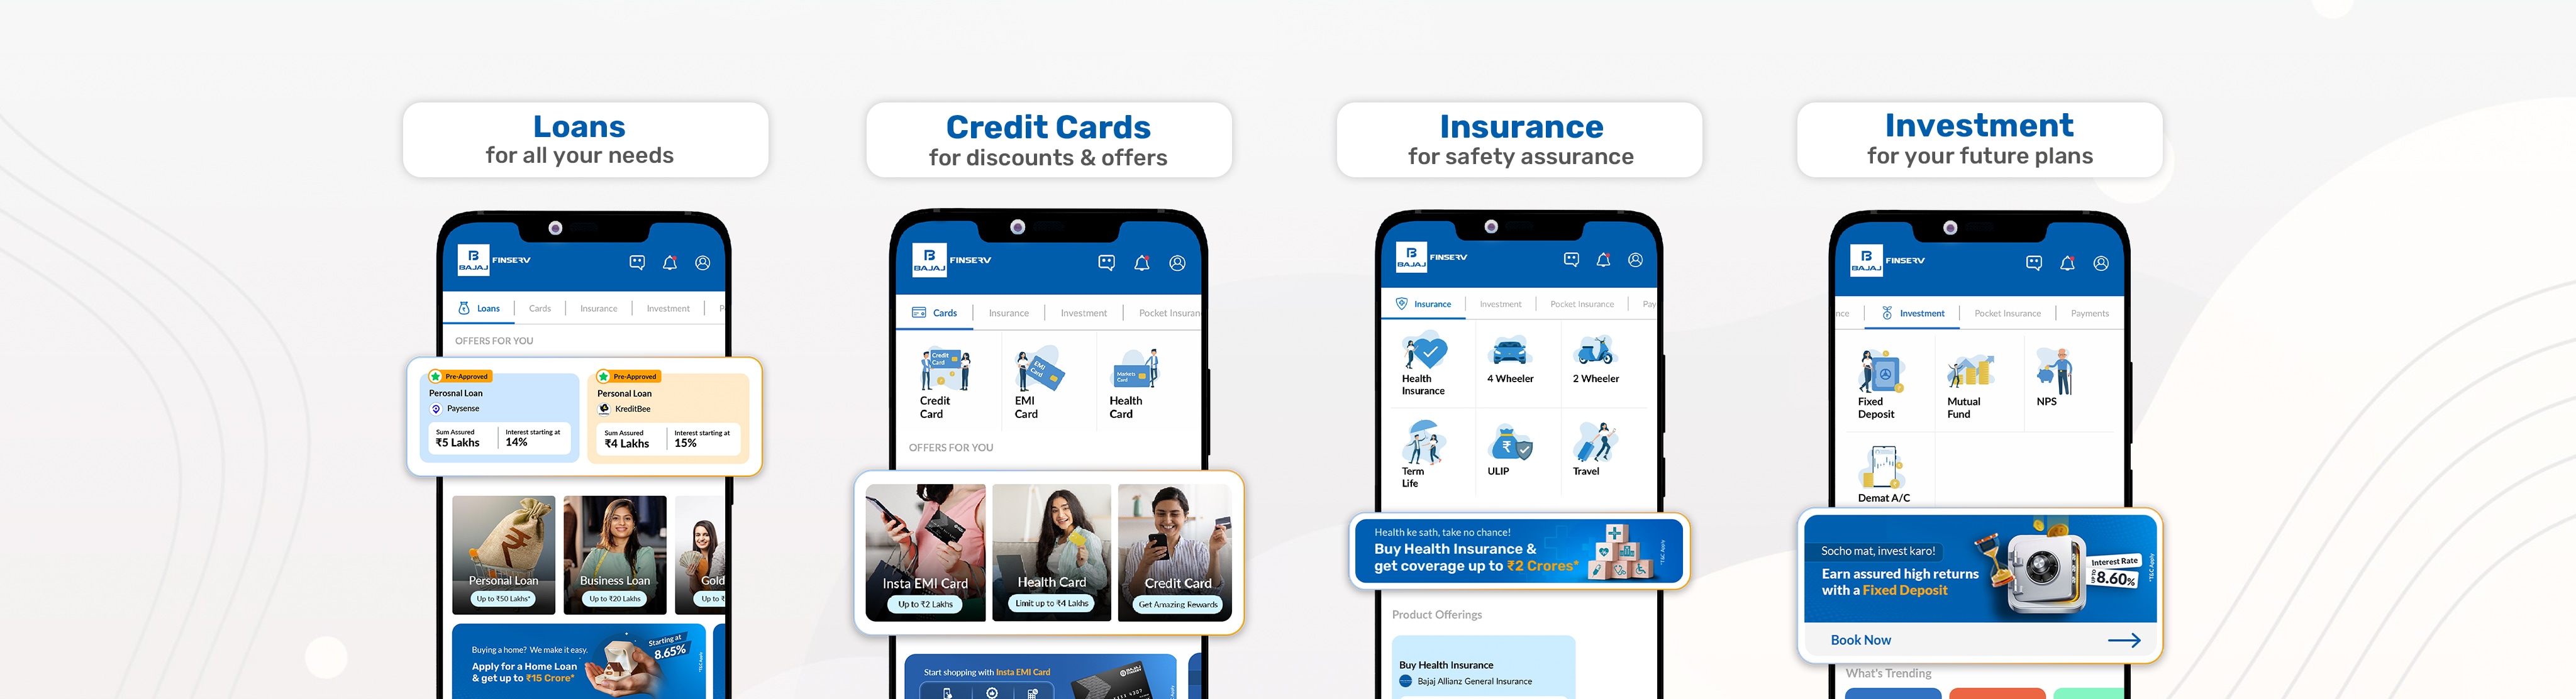 Samsung Wallet | Apps & Services | Samsung US